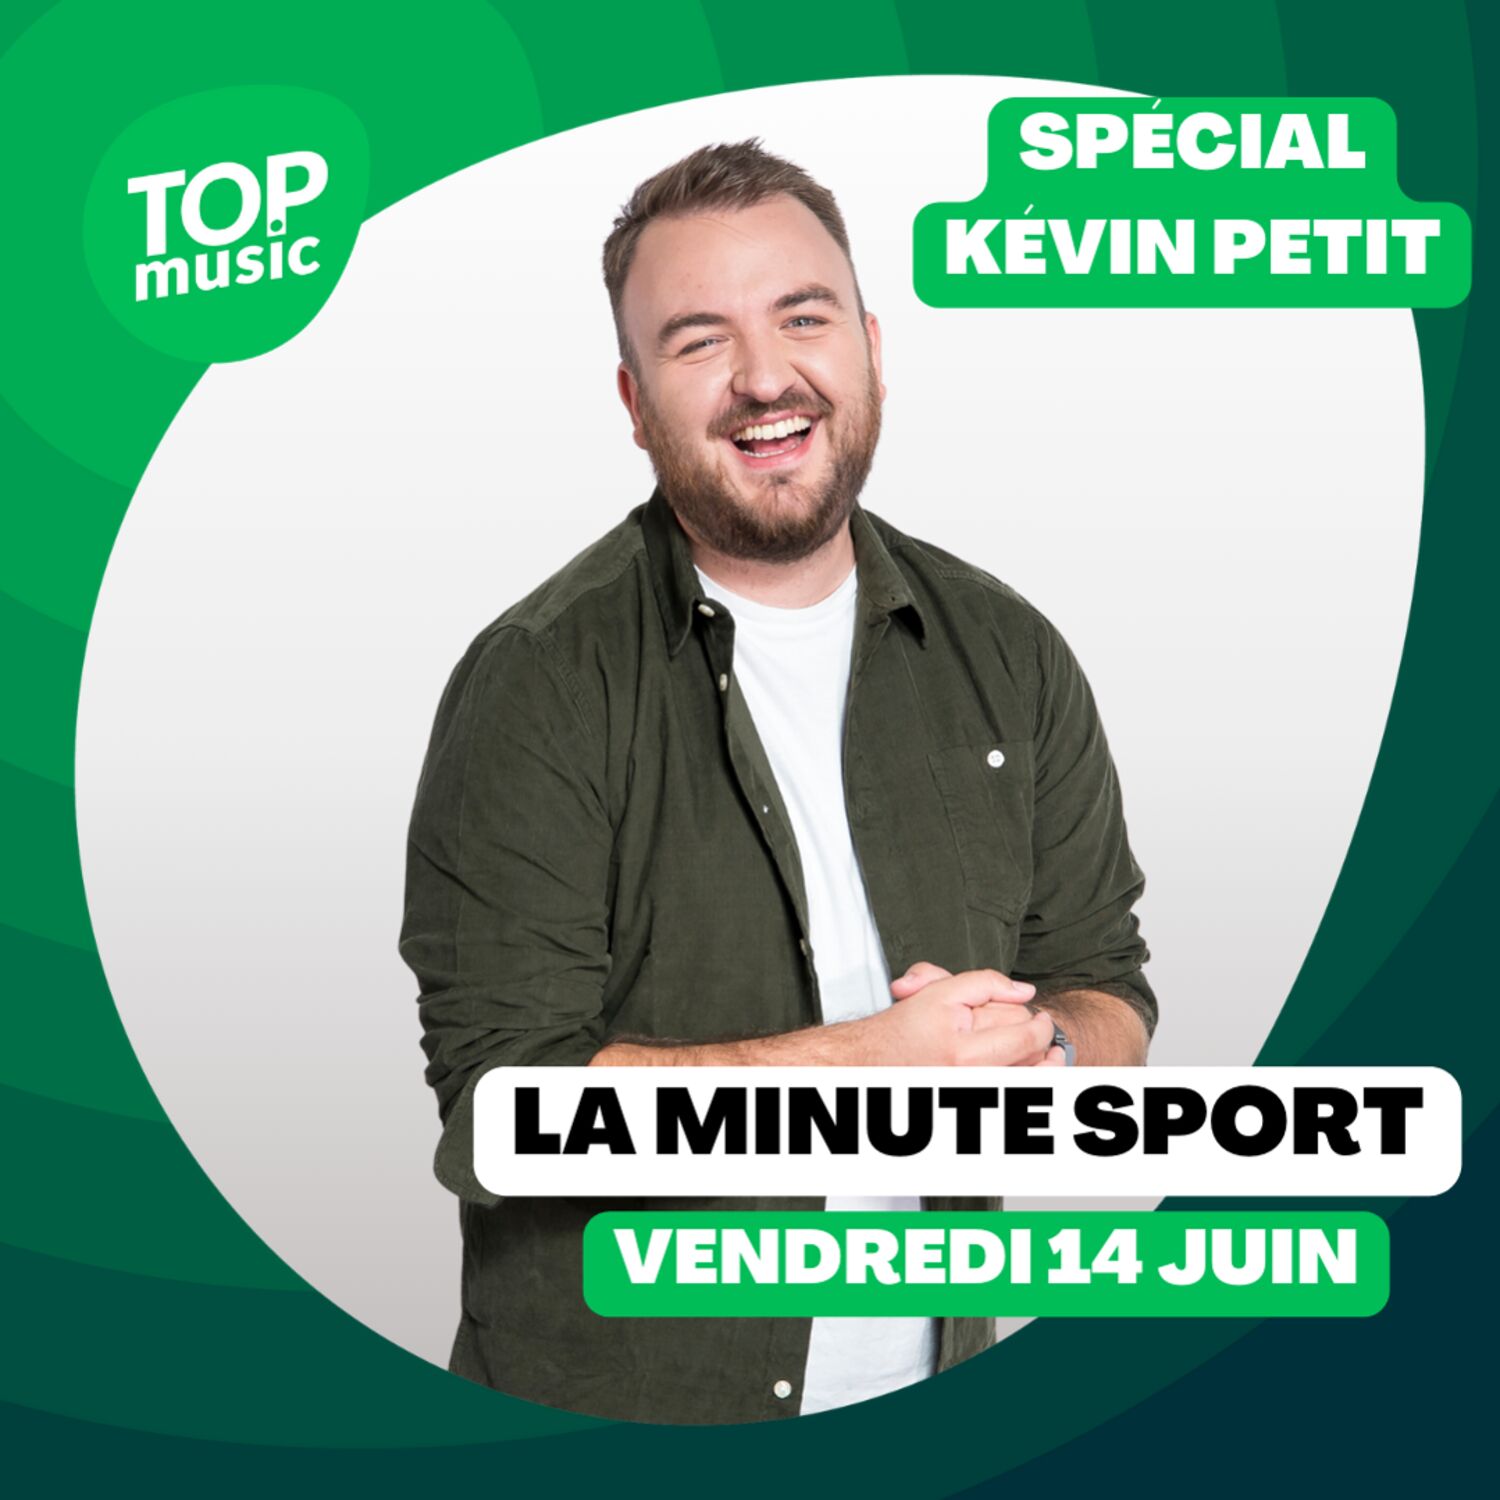 La Minute Sport spécial Kévin Petit - vendredi 17 mai